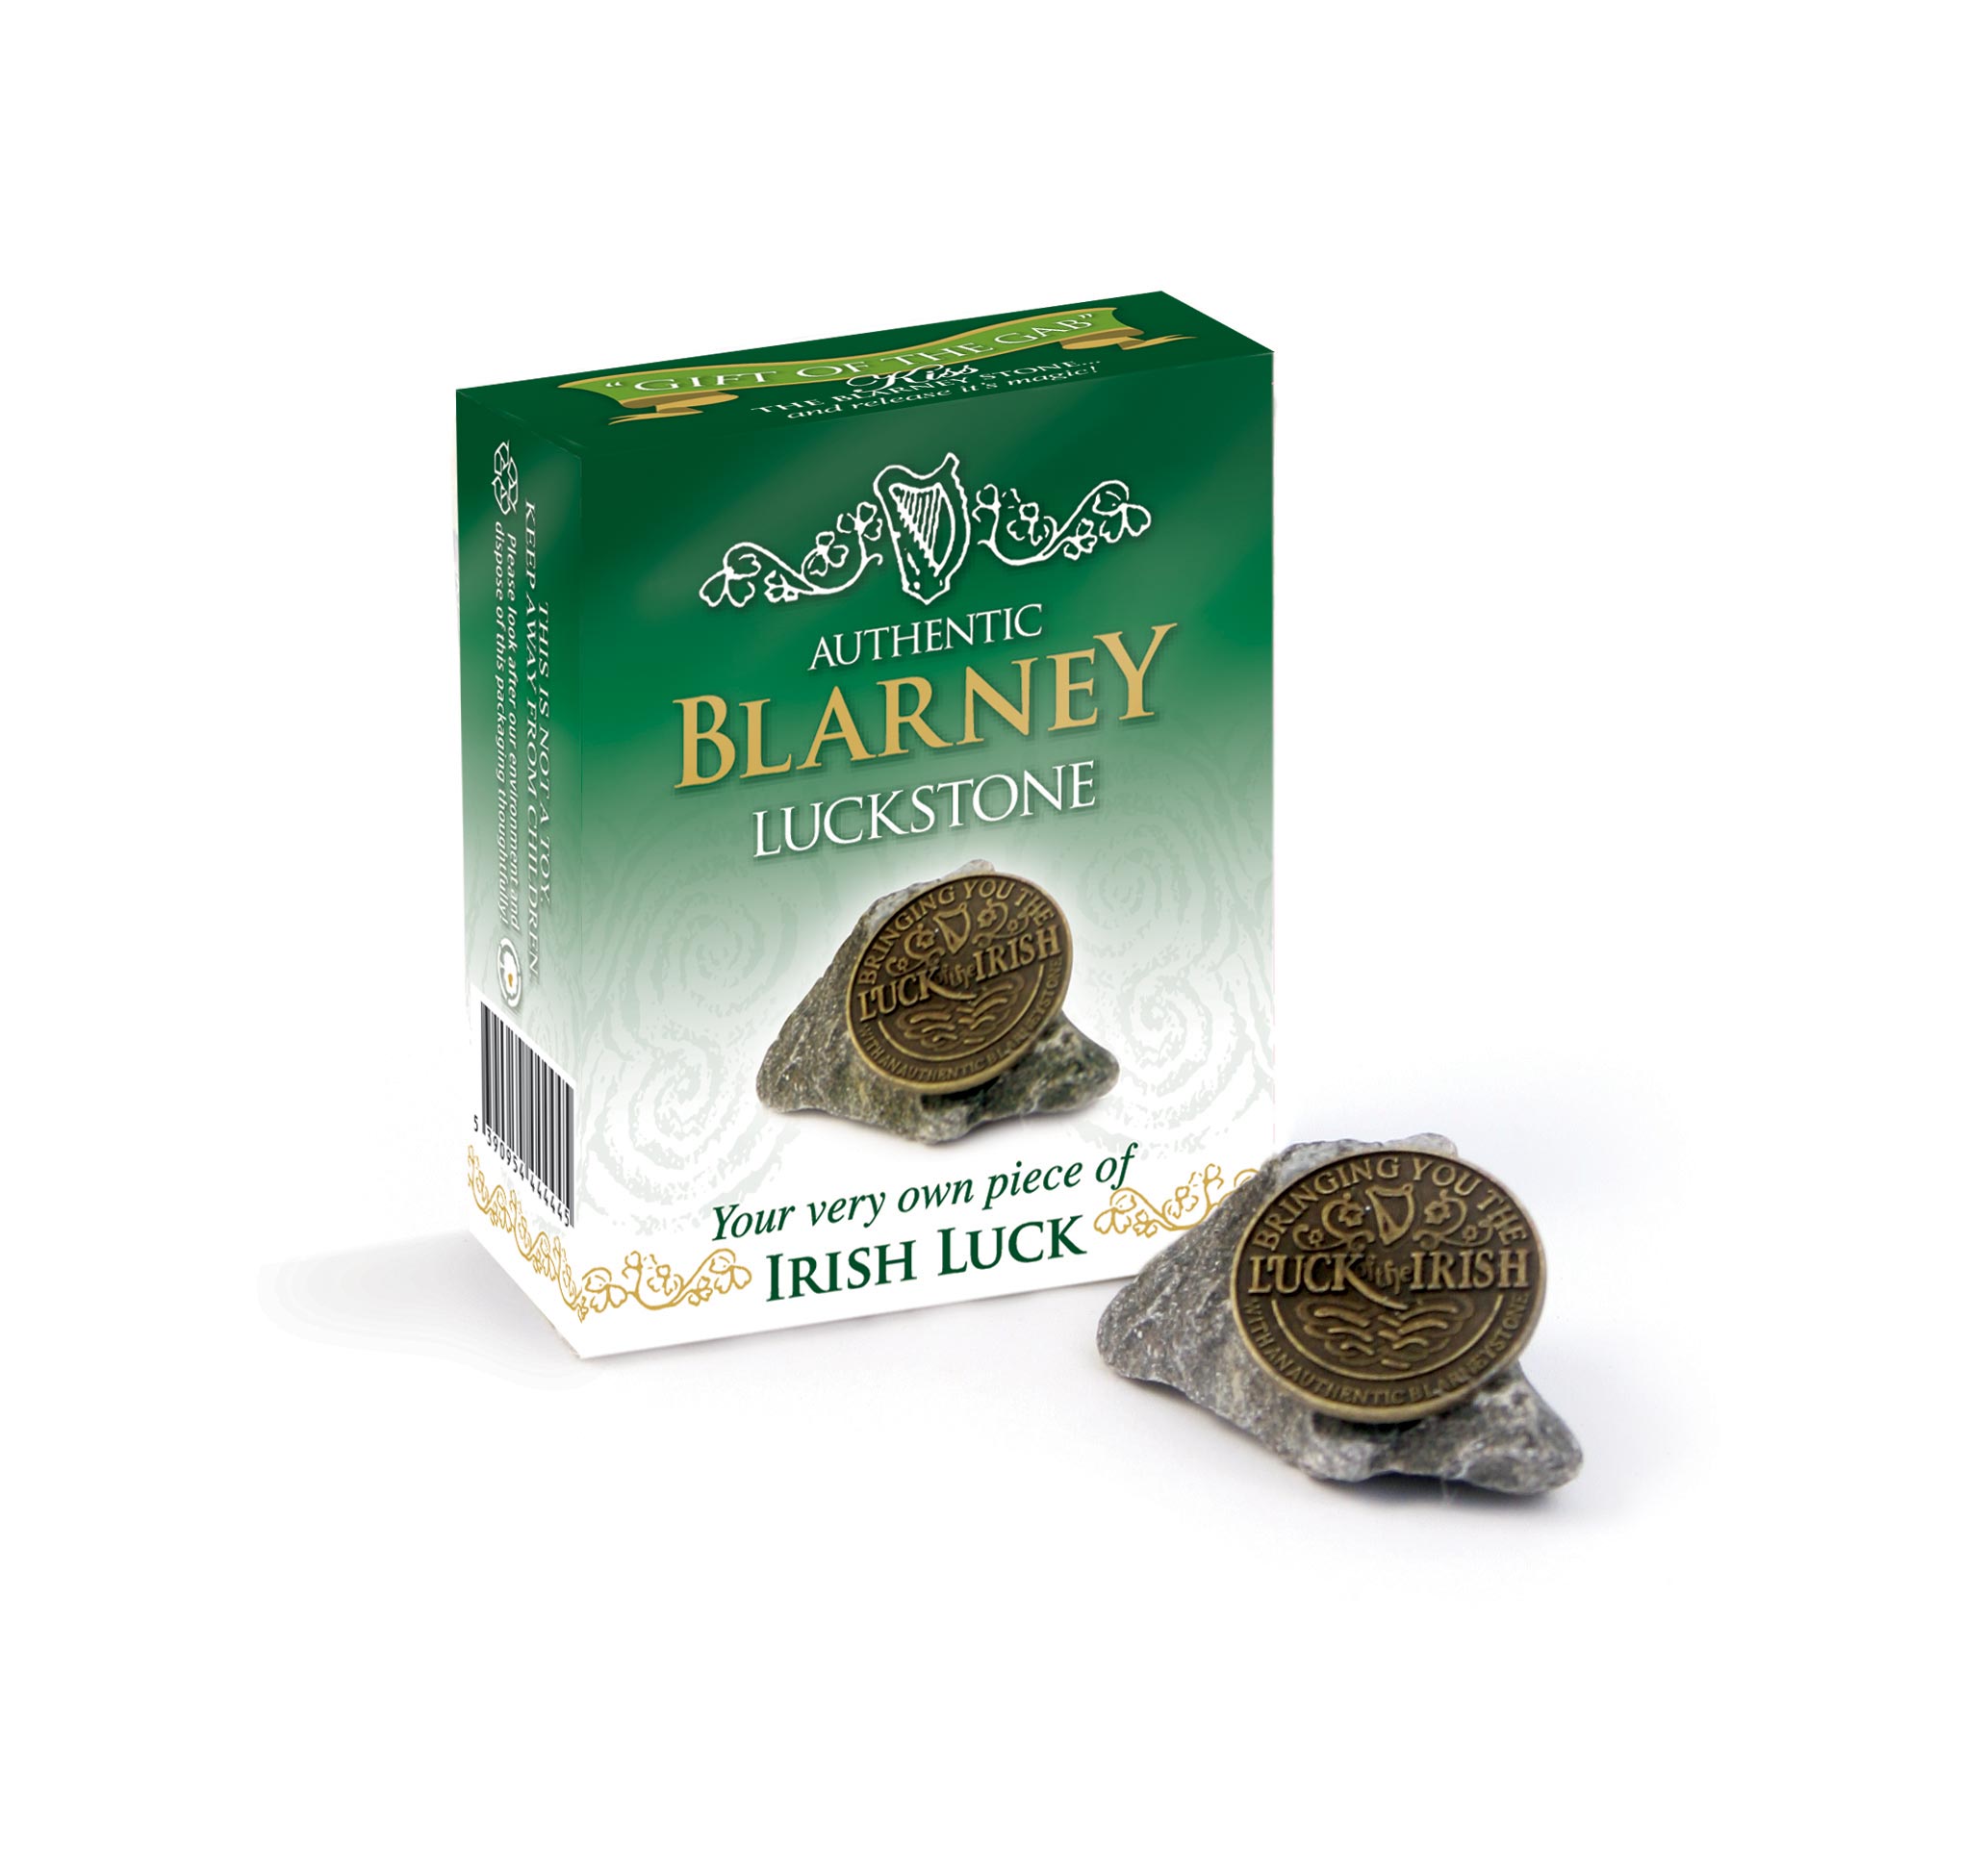 Blarney Luckstone